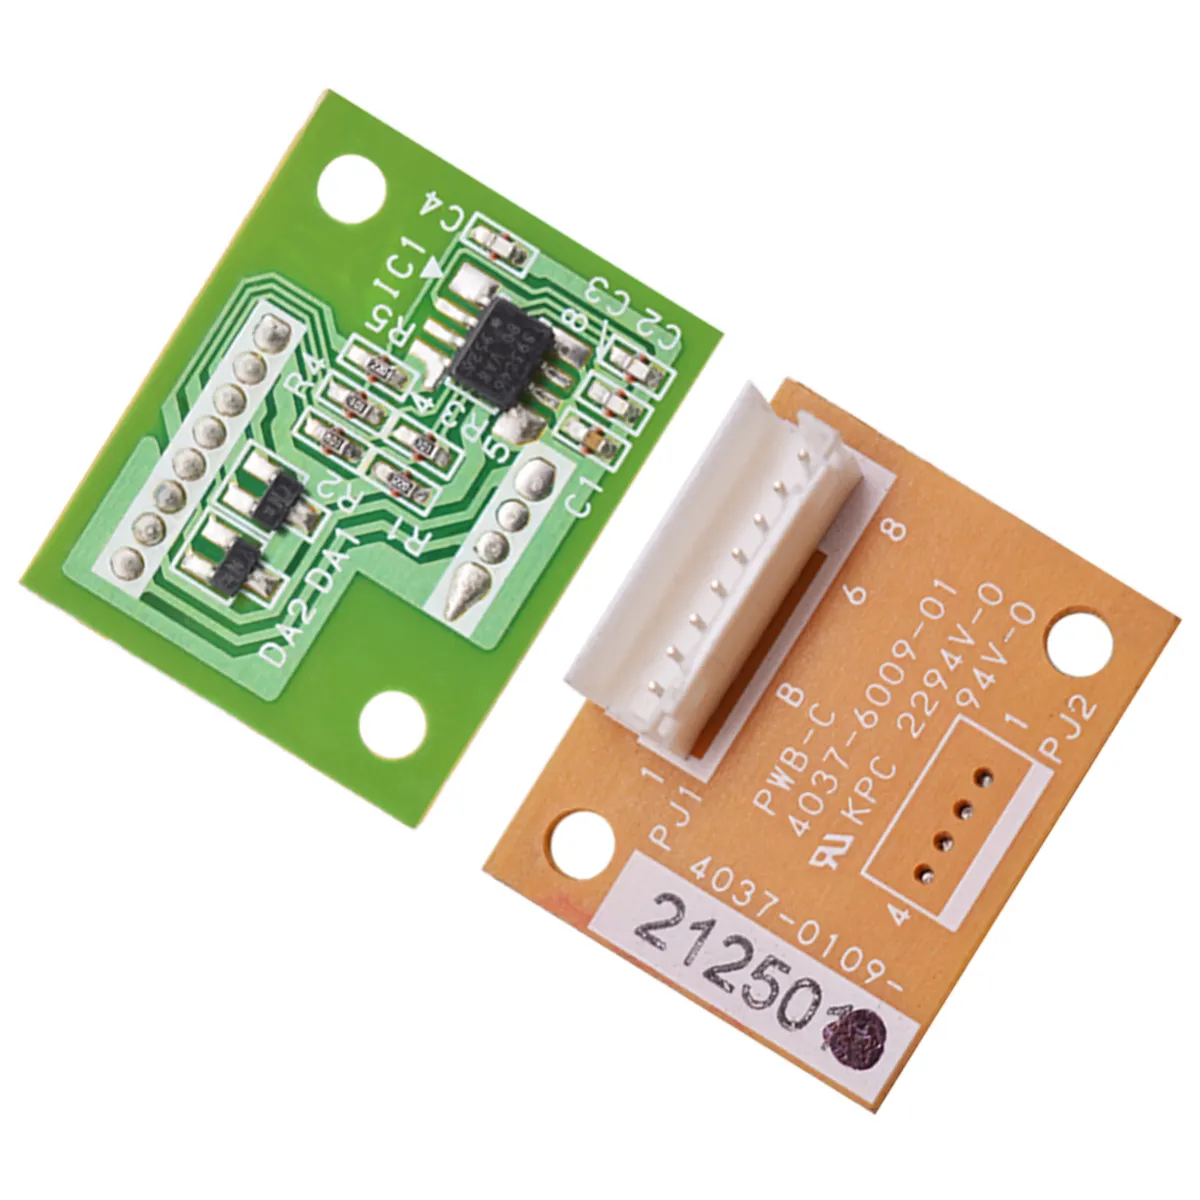 Chip untuk Konica Minolta baru chip printer Bizhub 451 chip untuk Konica Minolta suku cadang